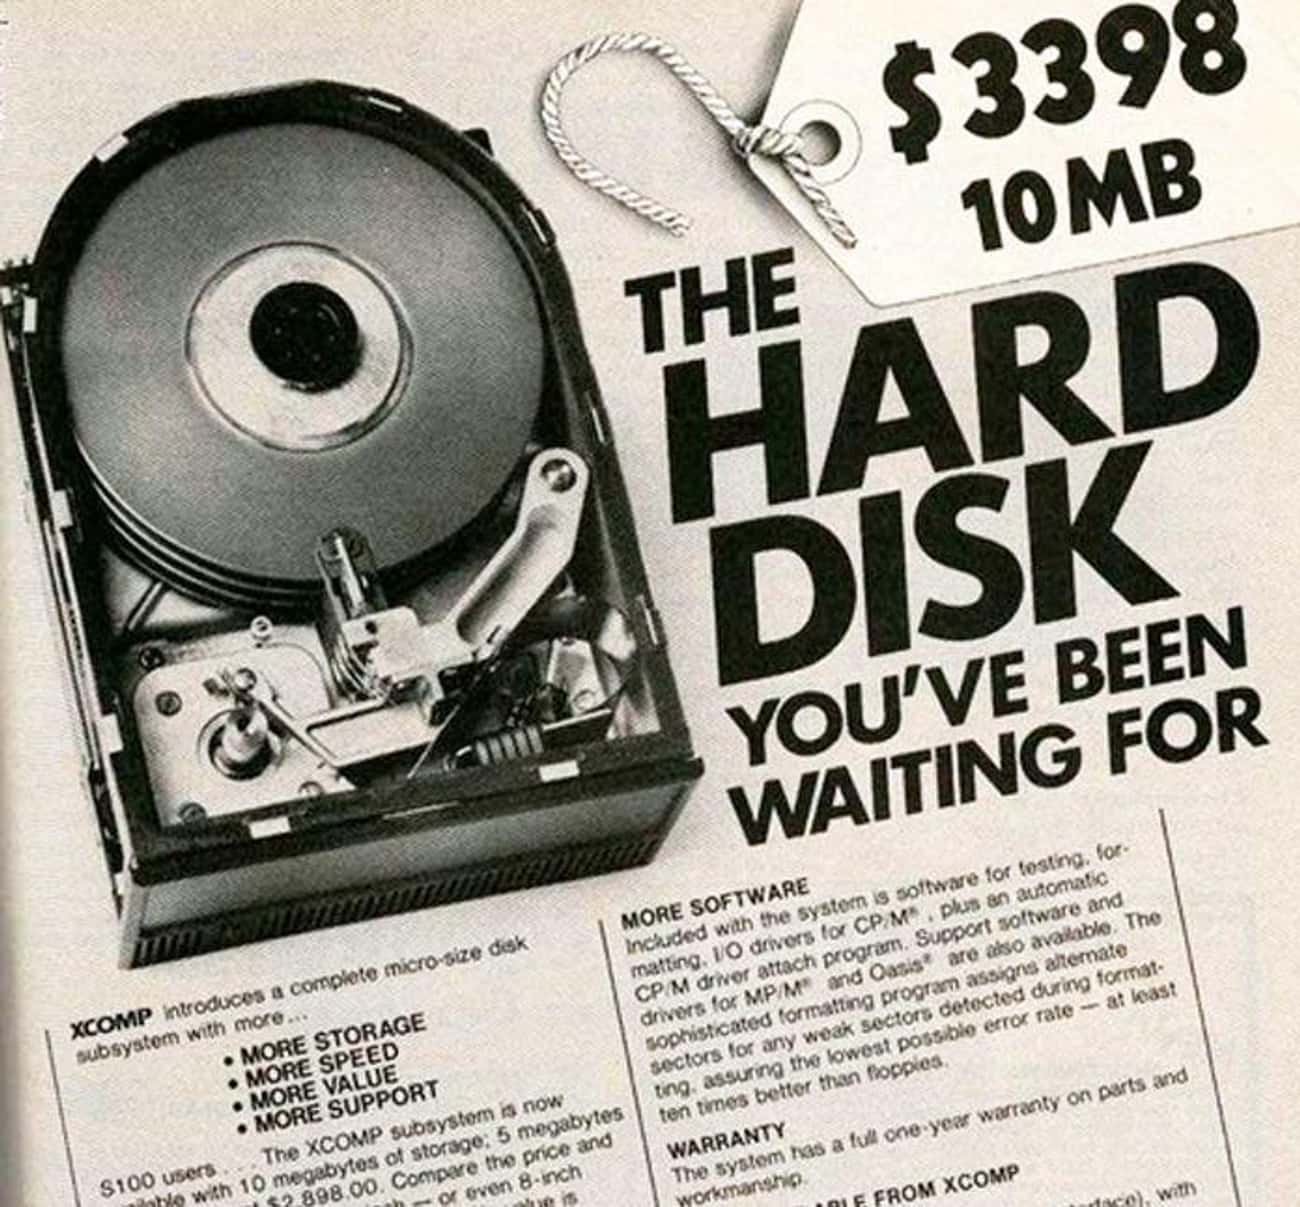 XComp 10MB Hard Disk: $3,398.00